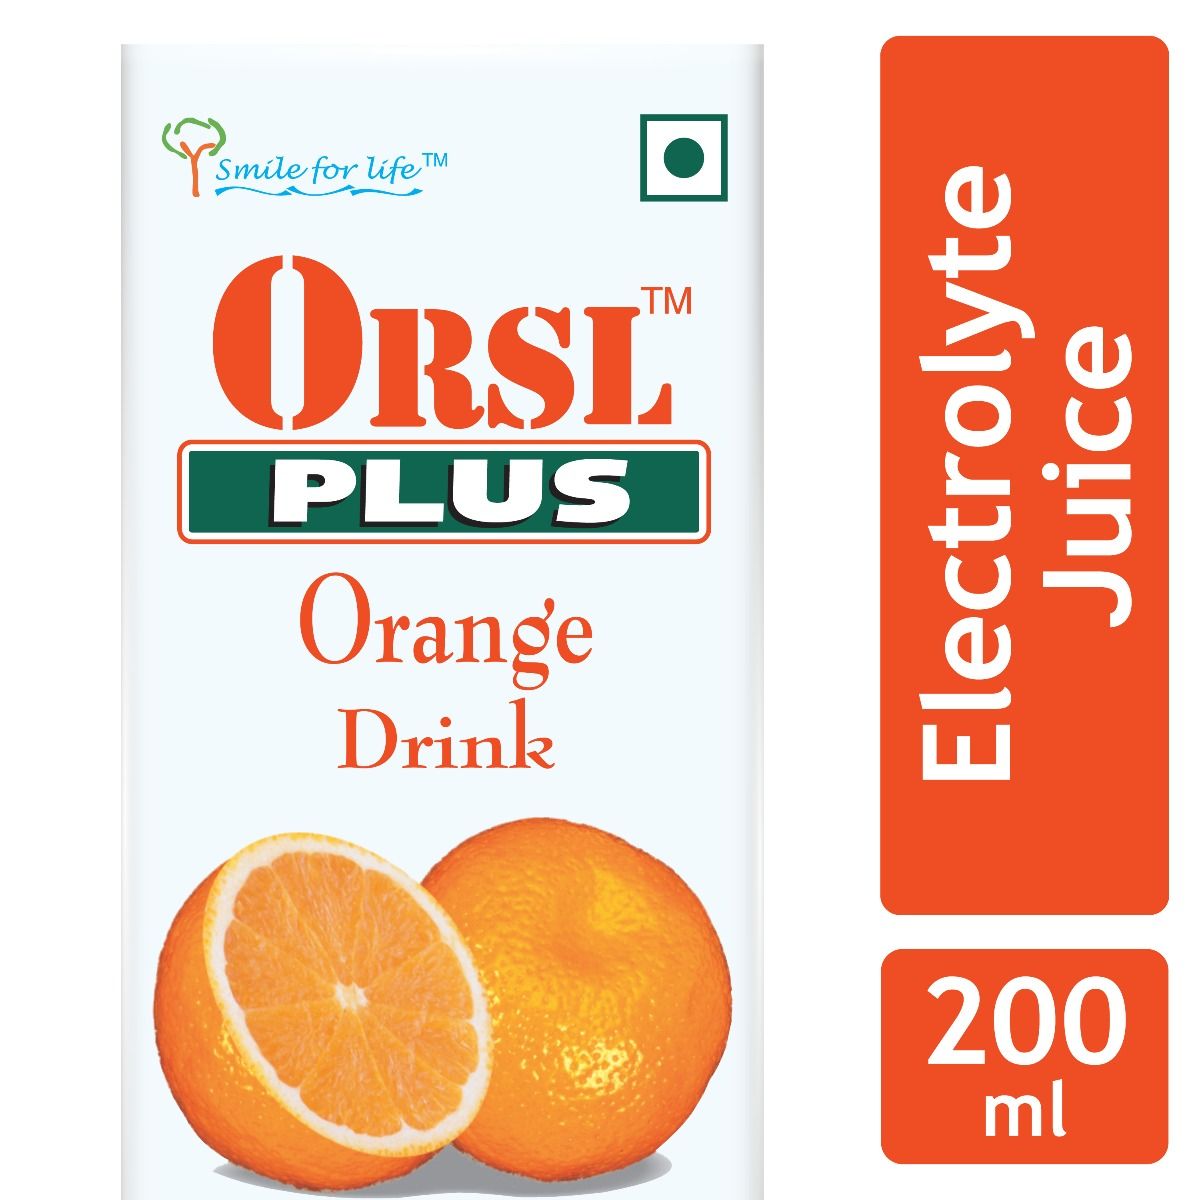 Orsl Plus Orange Drink 200 ml, Pack of 1 LIQUID